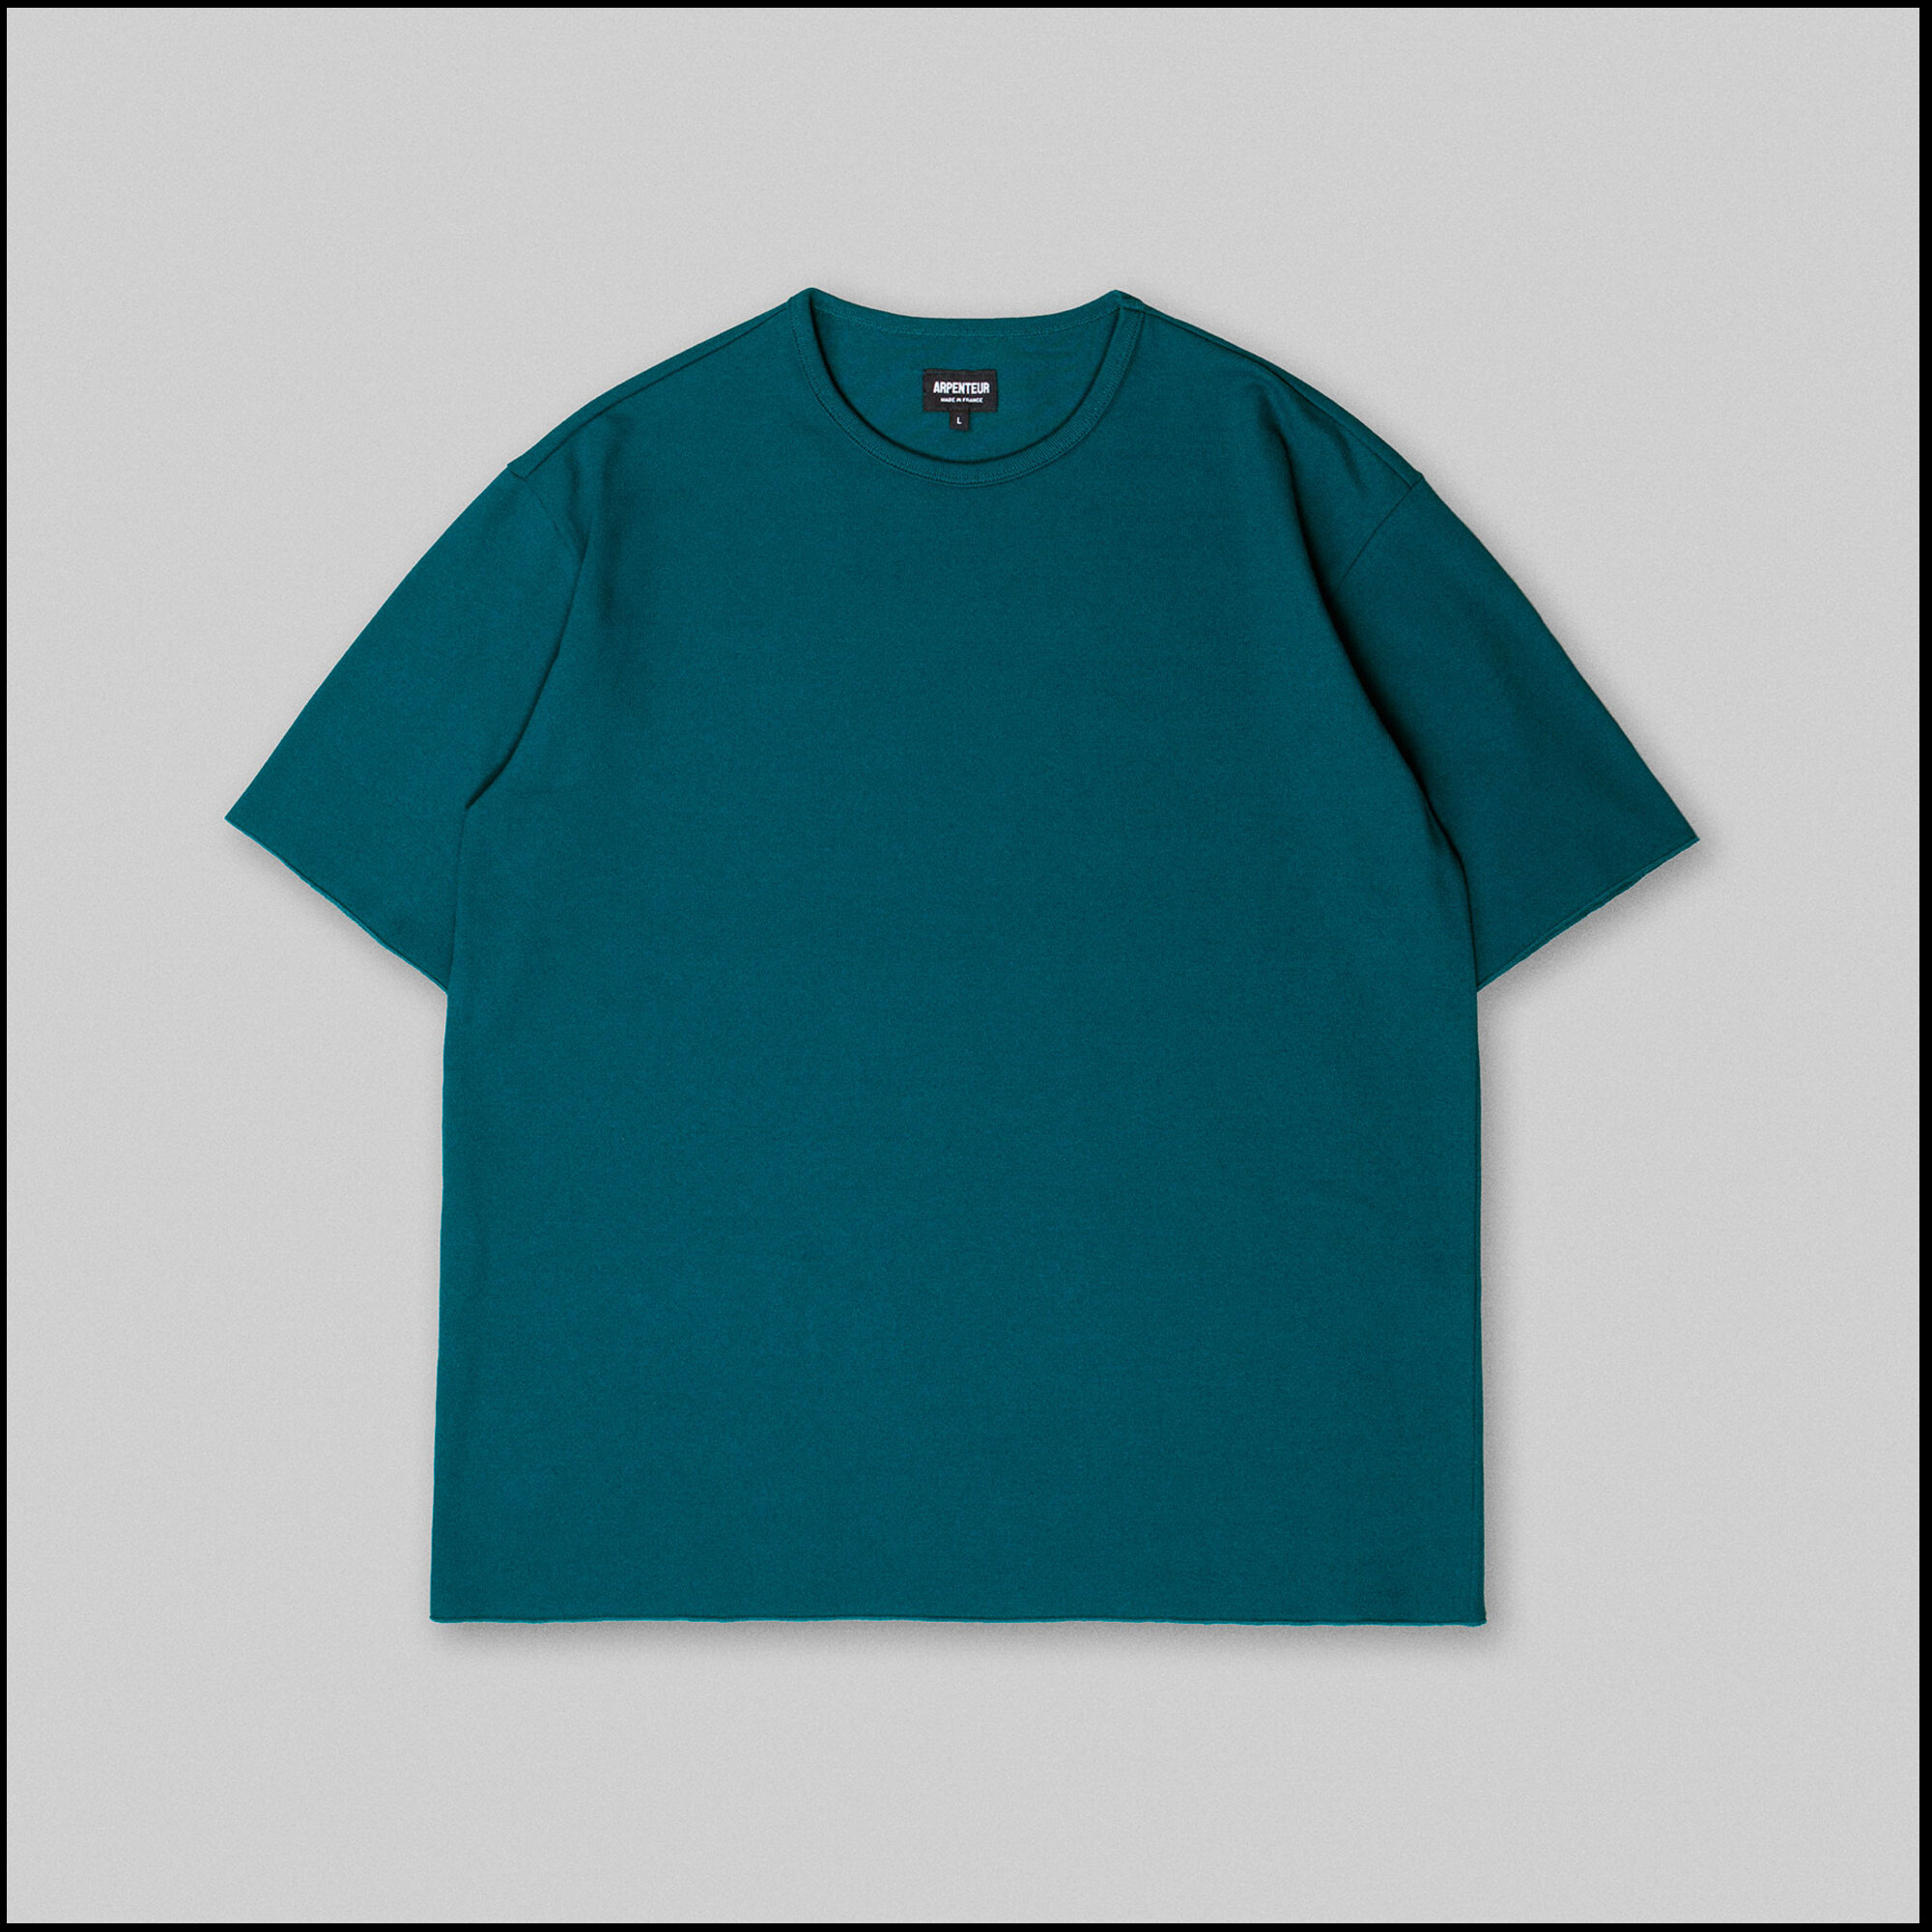 PONTUS t-shirt by Arpenteur in Peacock blue color